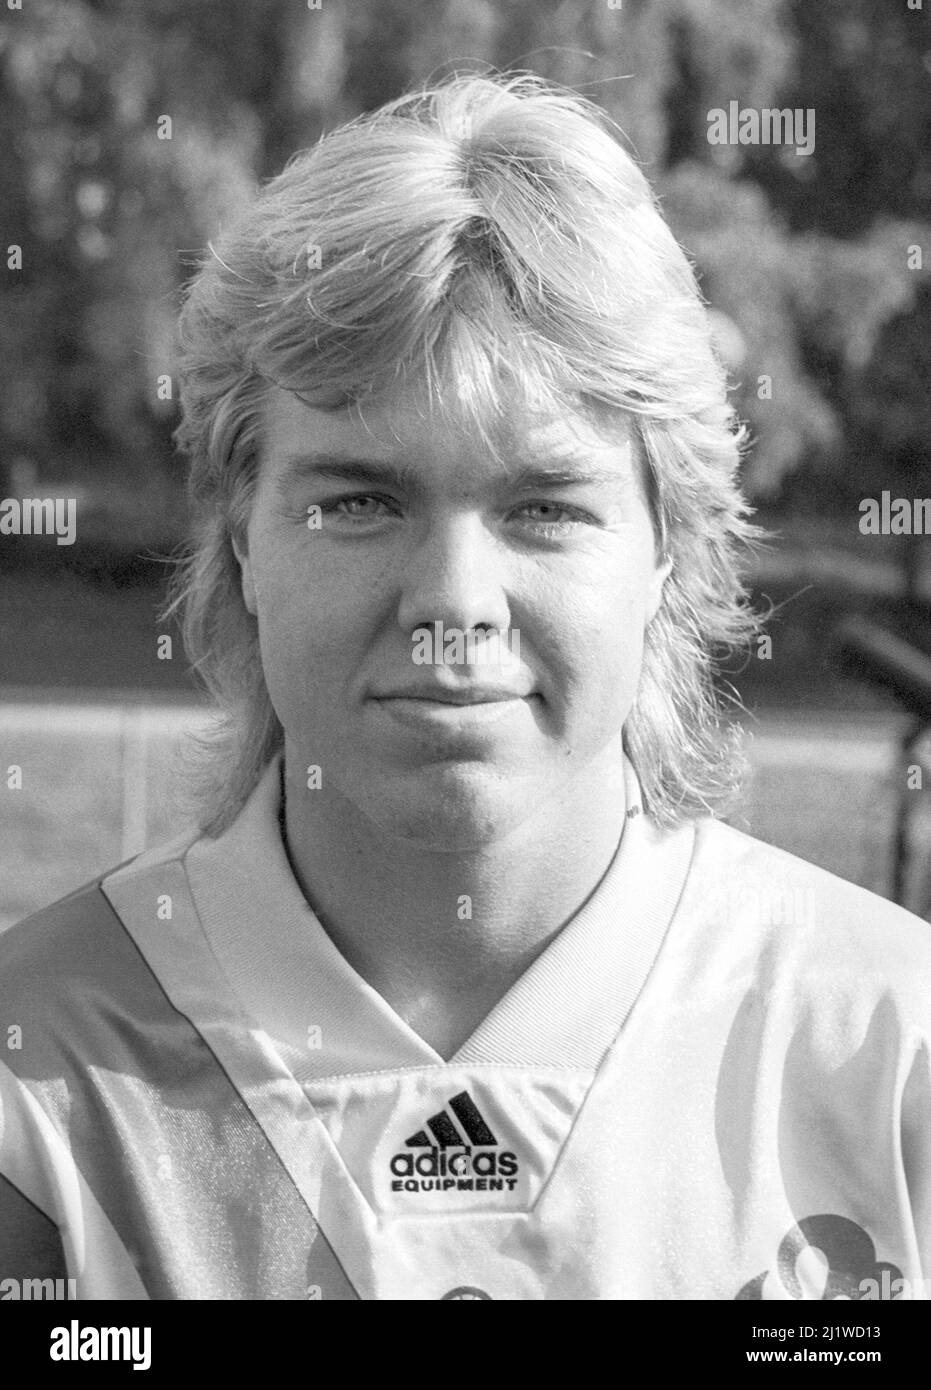 TOMAS BROLIN football Parma e in Svezia nationalteam al campionato europeo in Svezia 1992 Foto Stock